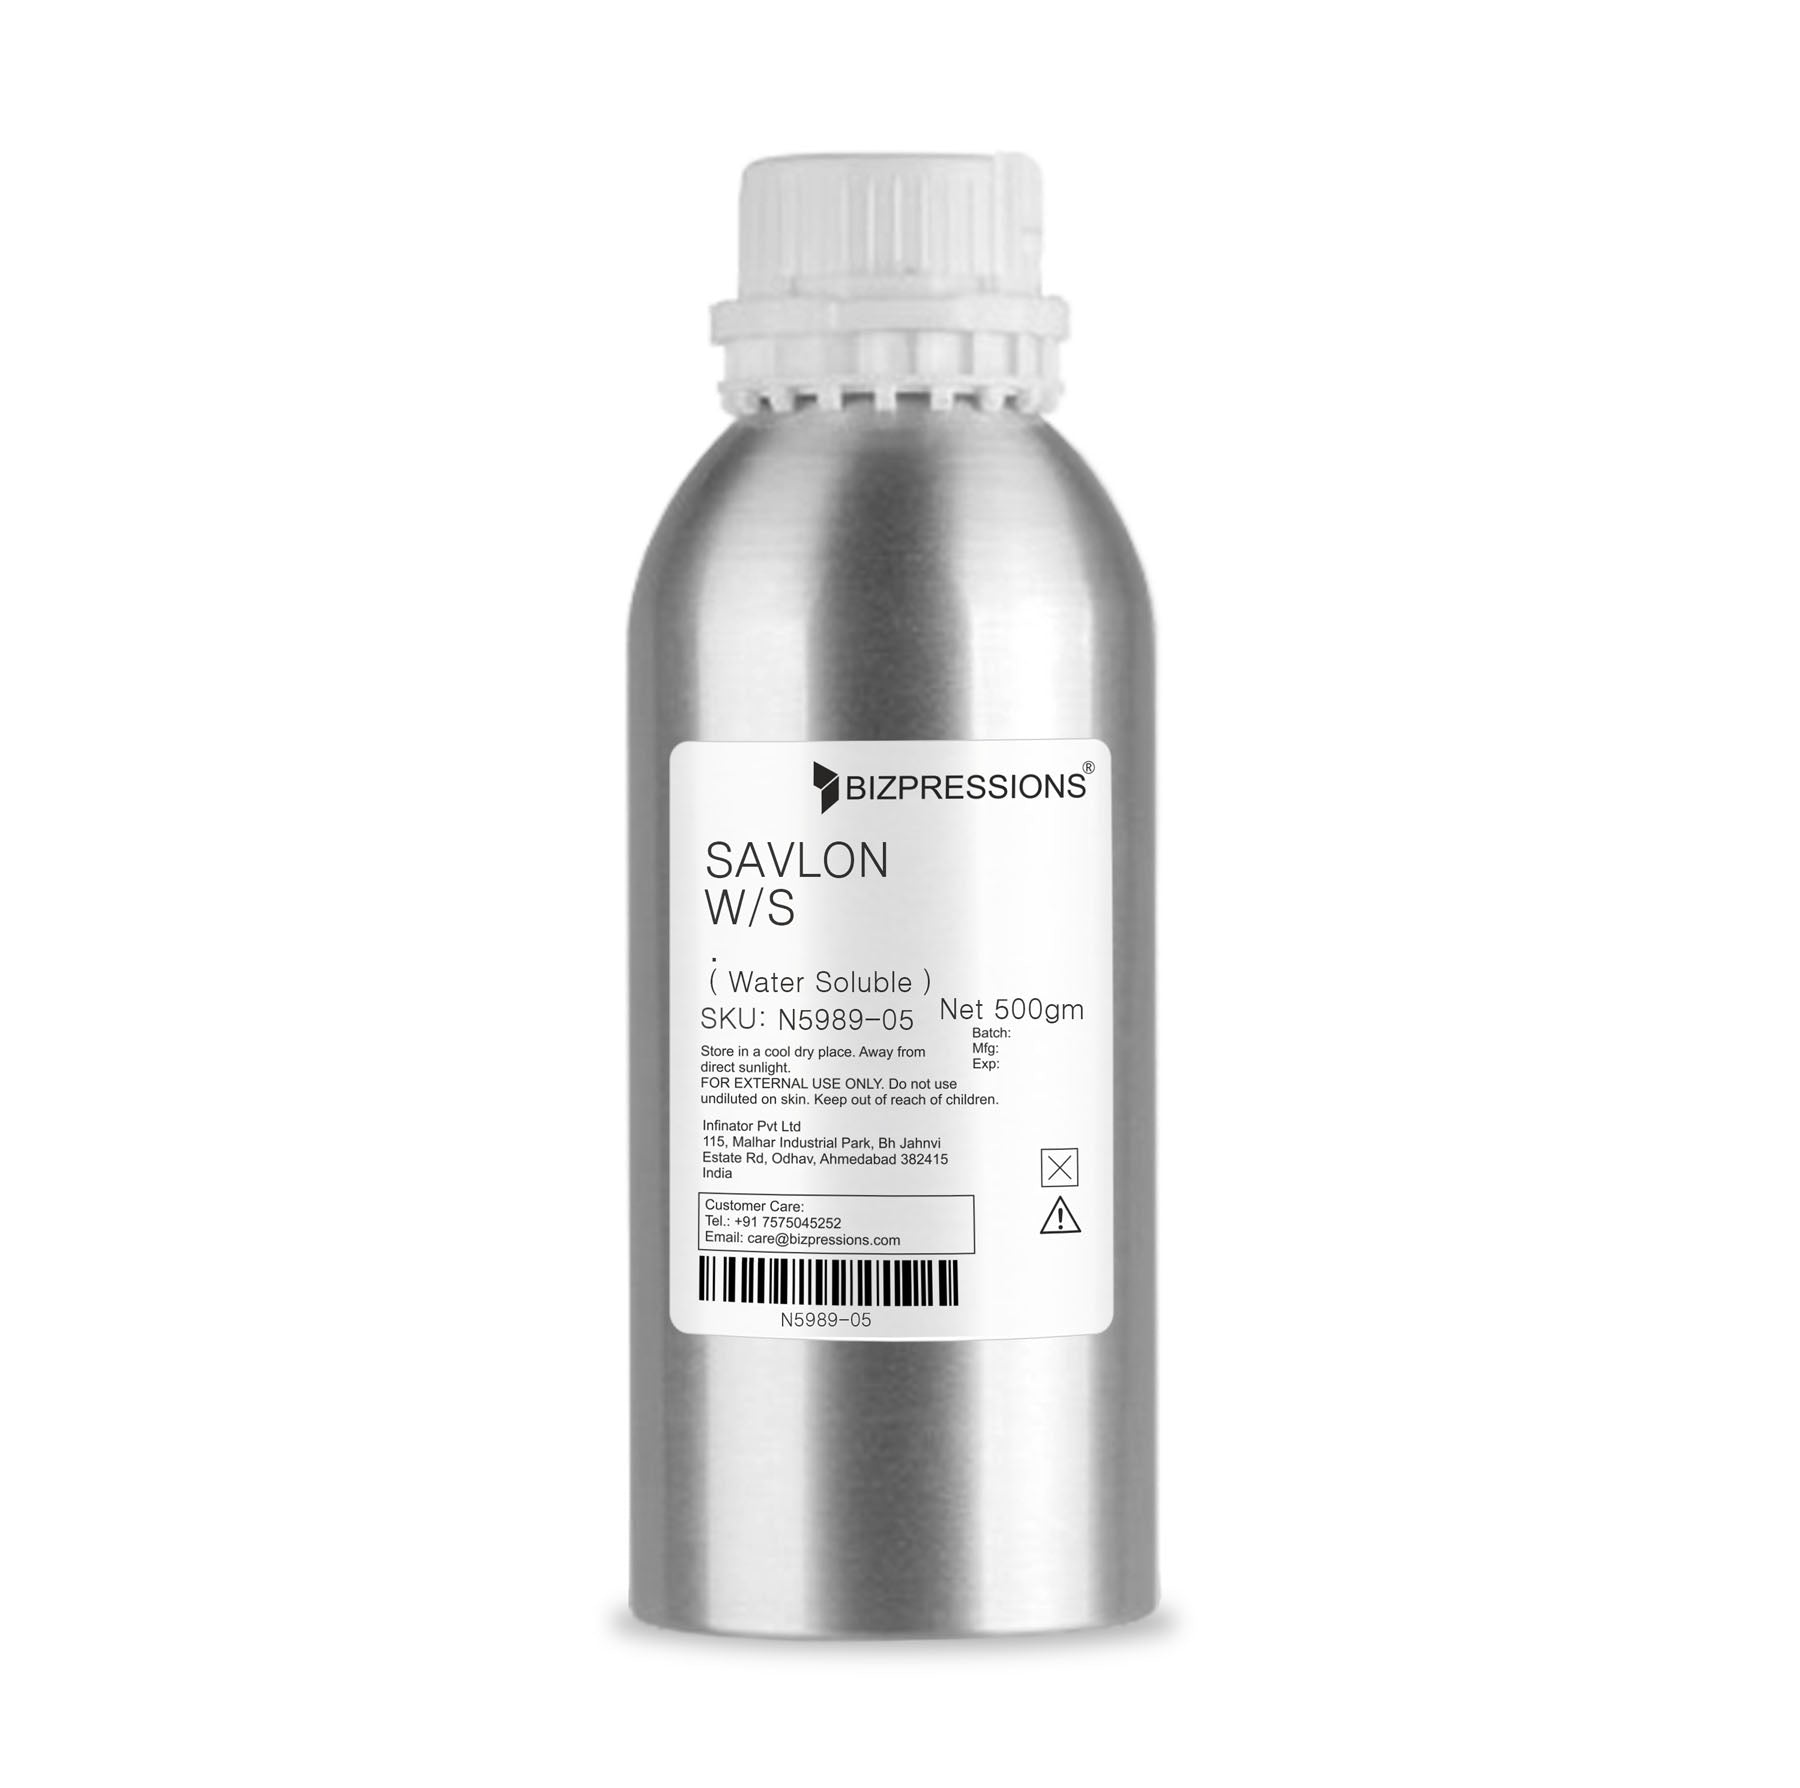 SAVLON W/S - Fragrance ( Water Soluble ) - 500 gm